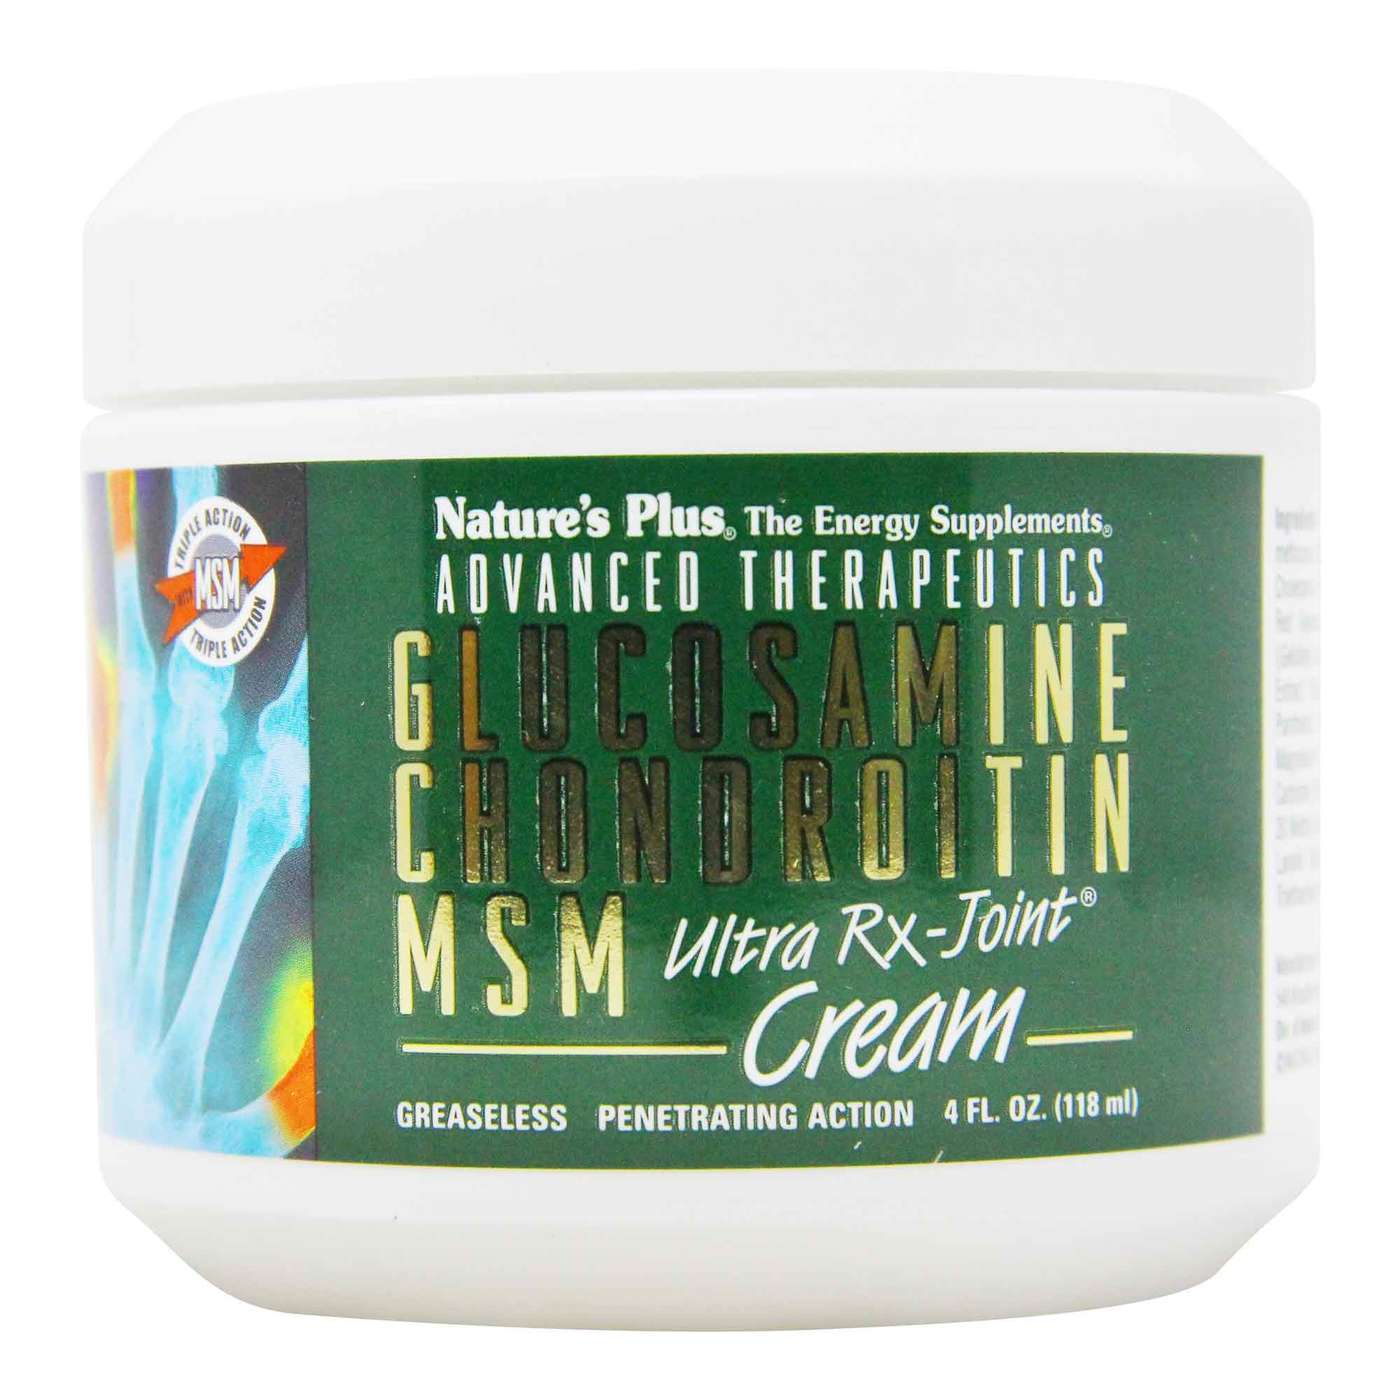 glucosamine and chondroitin cream